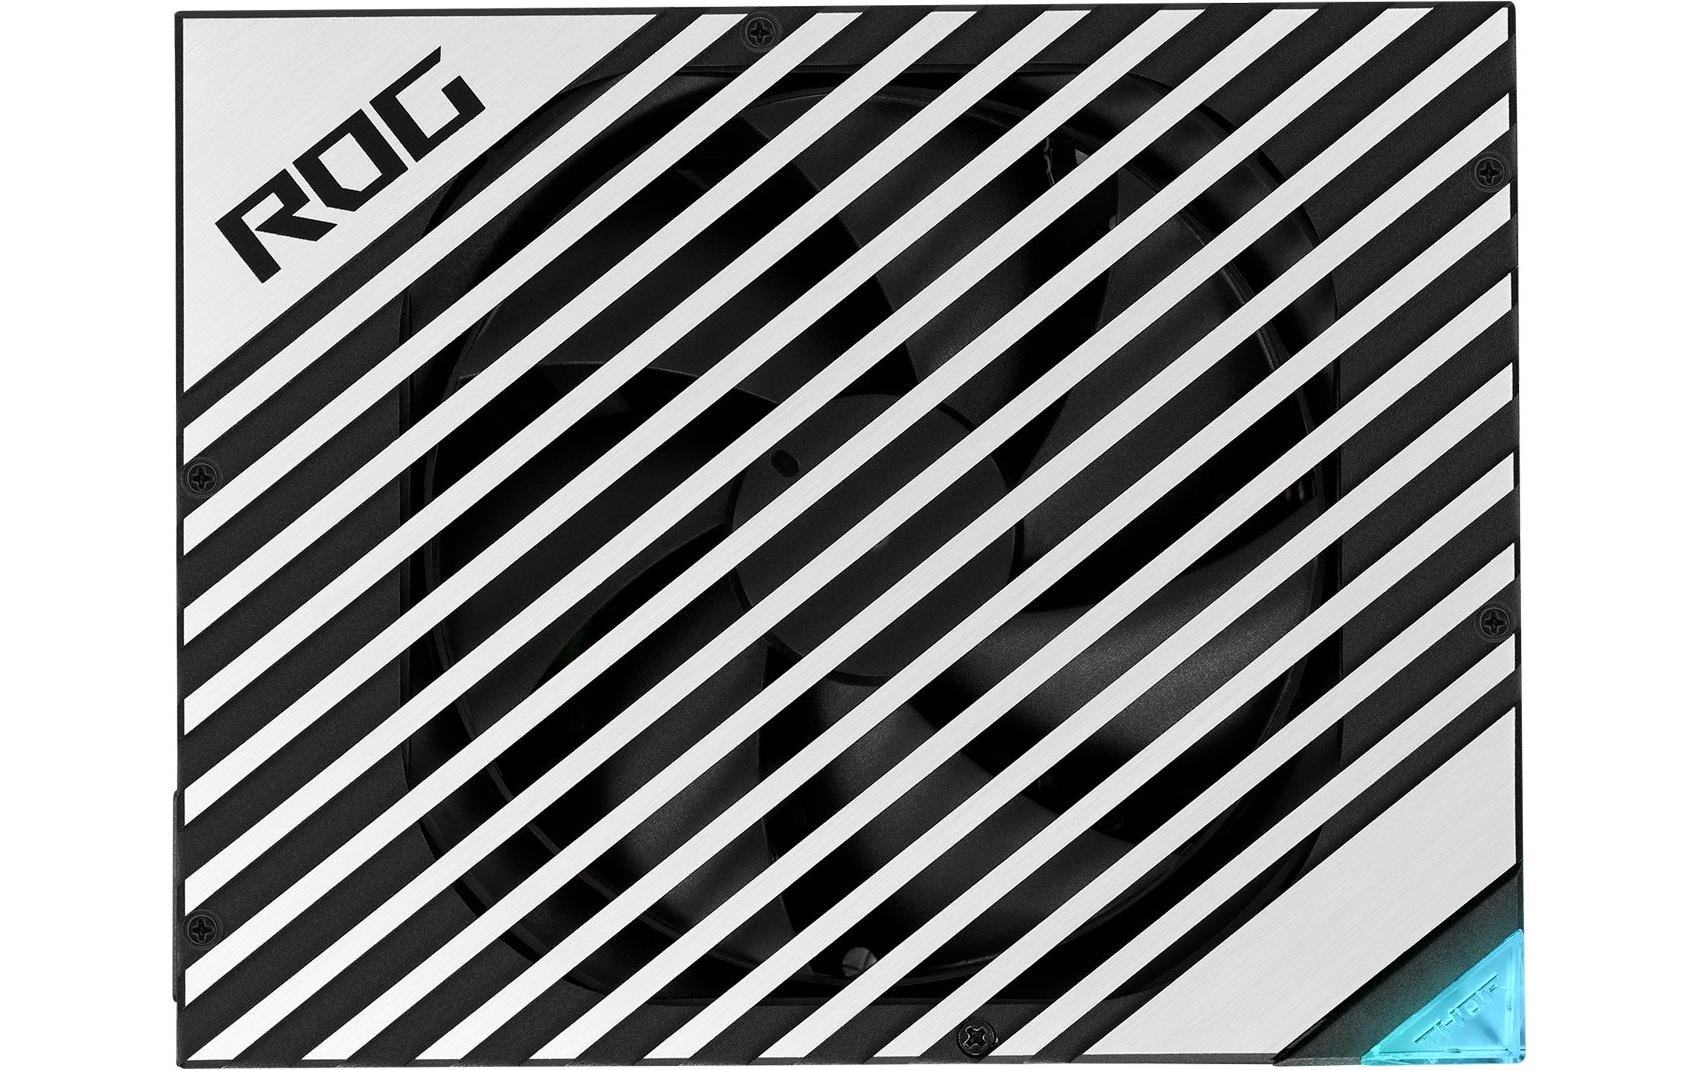 Asus PC-Netzteil »ROG-THOR-1200W Platinum II«